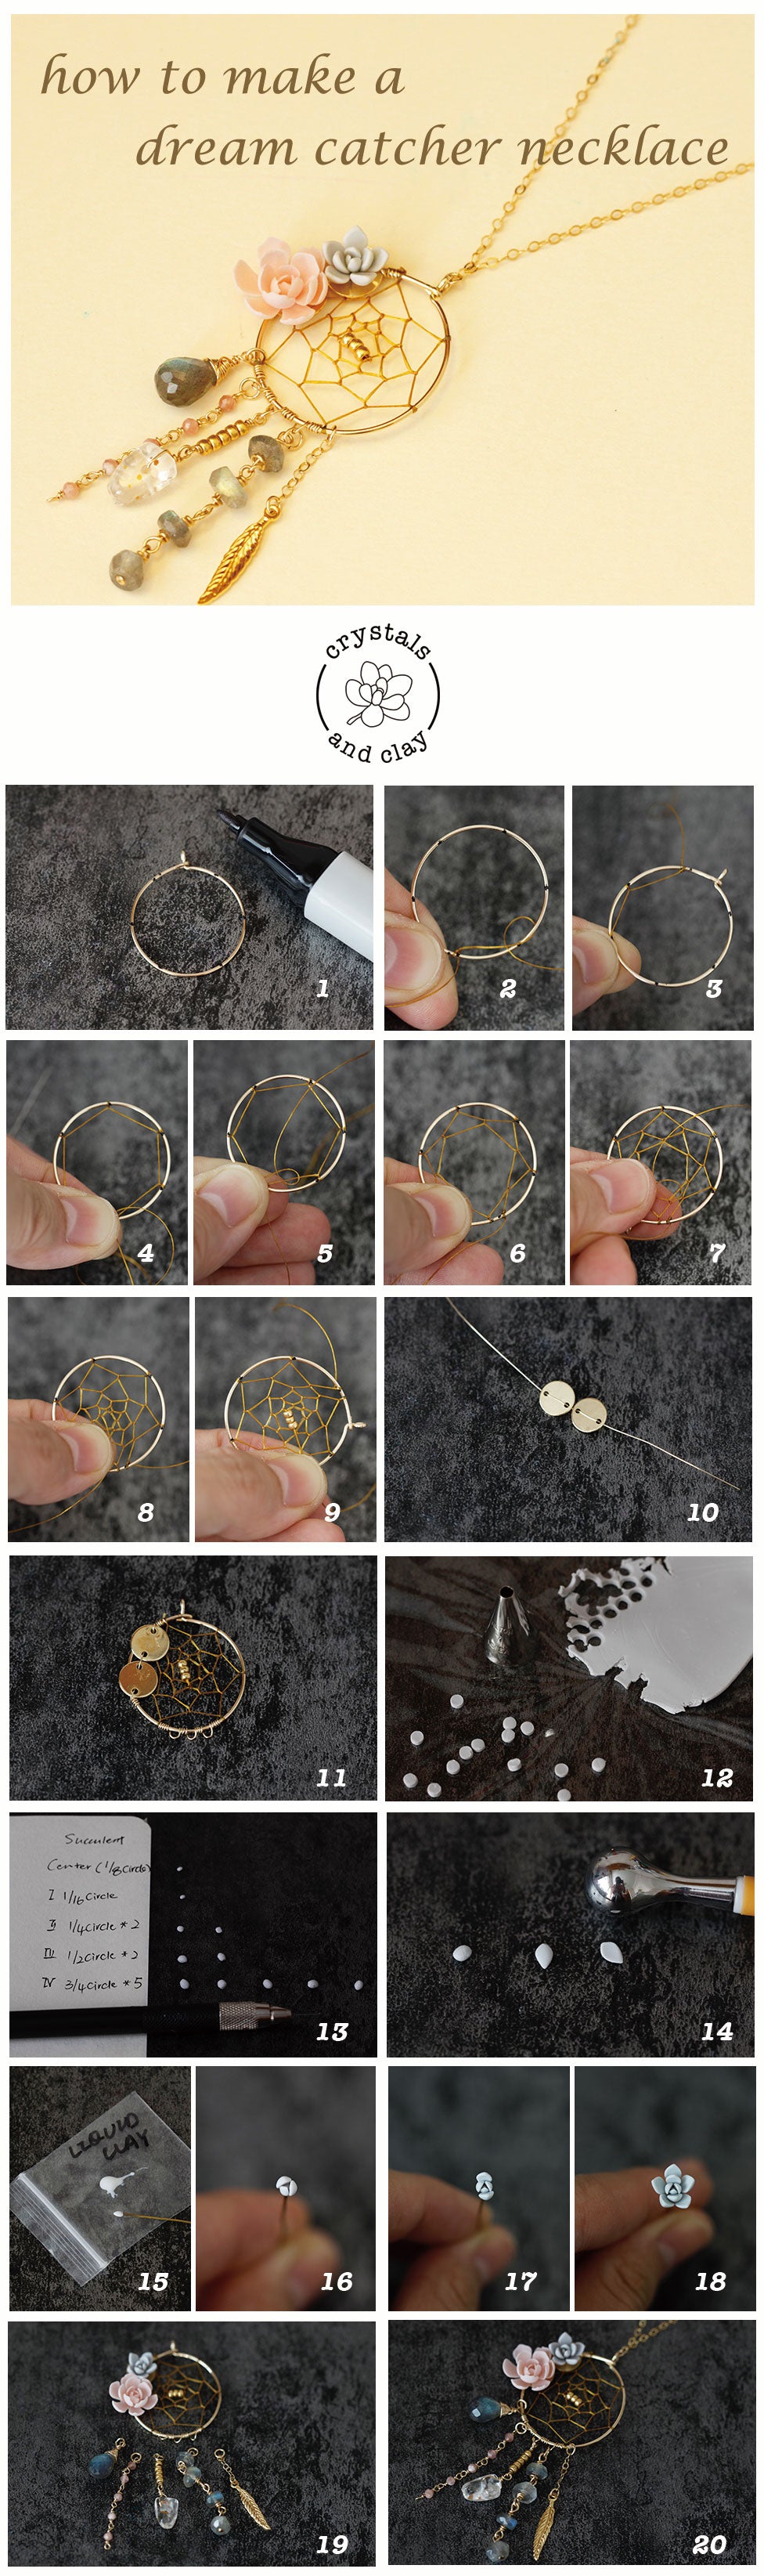 how to make a dream catcher necklace